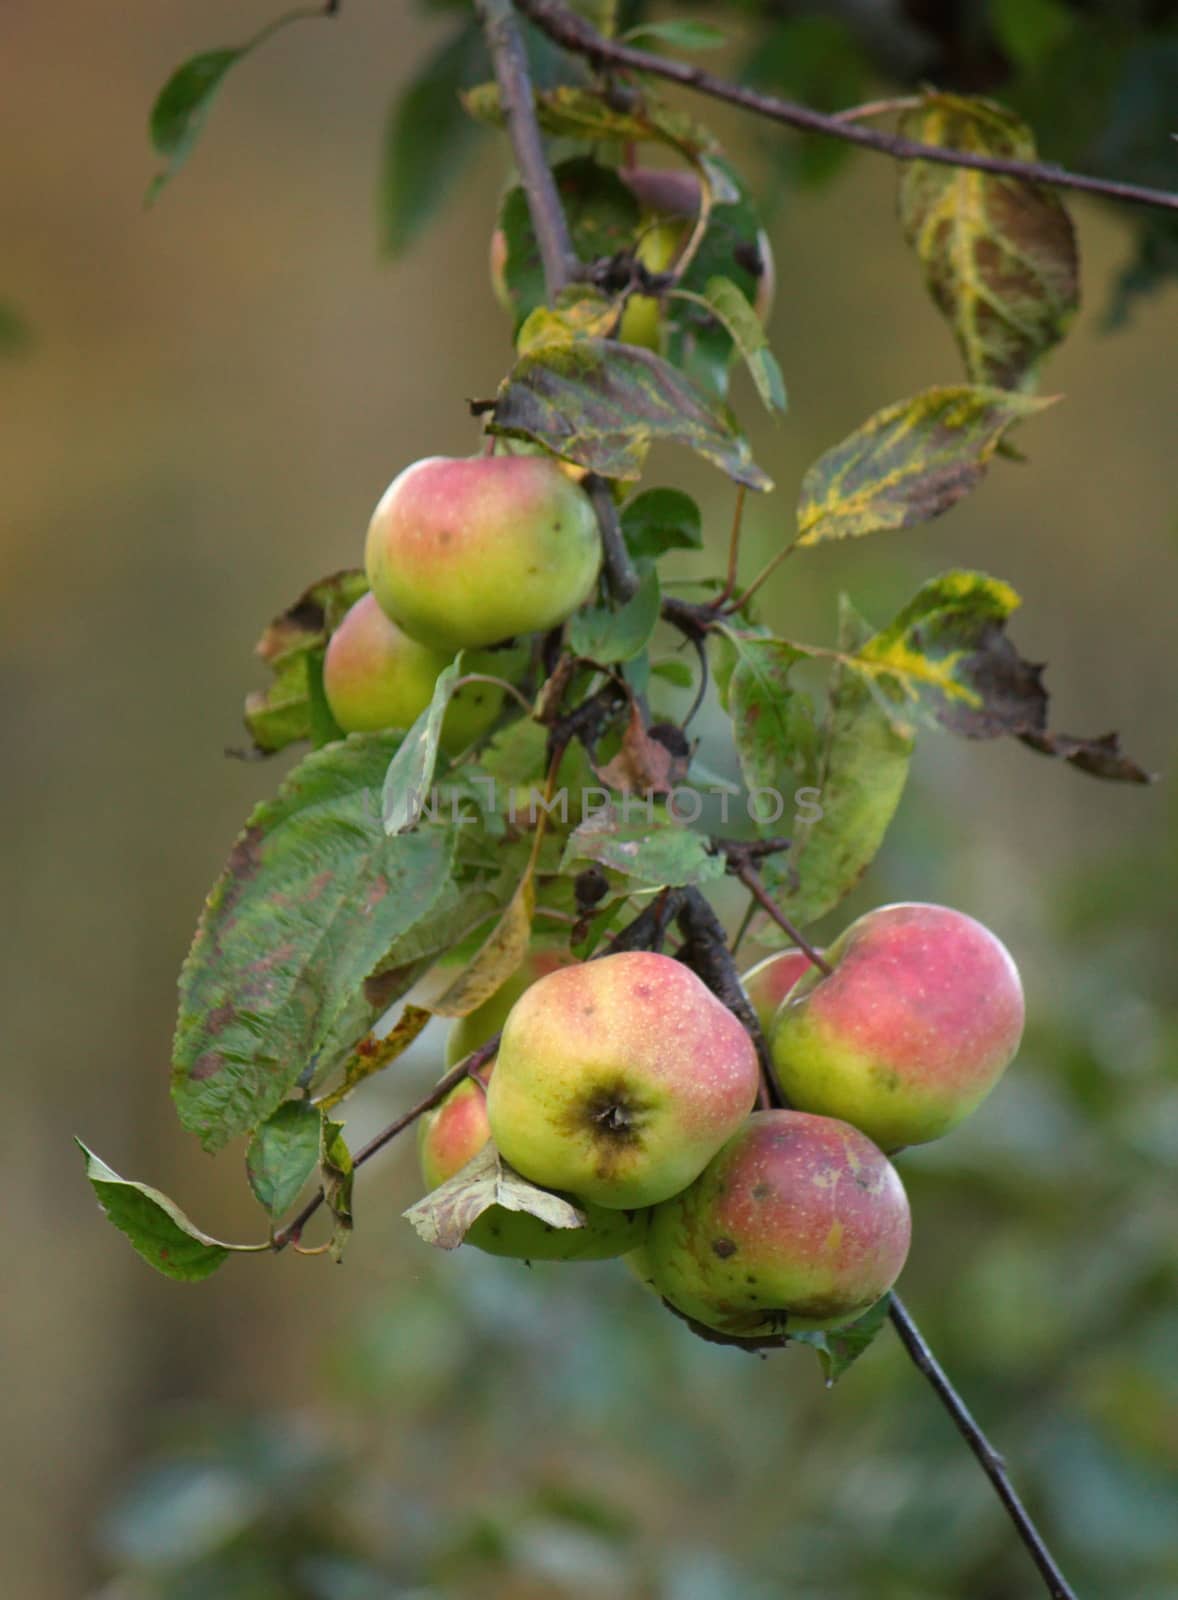 Apples on tree by Elenaphotos21